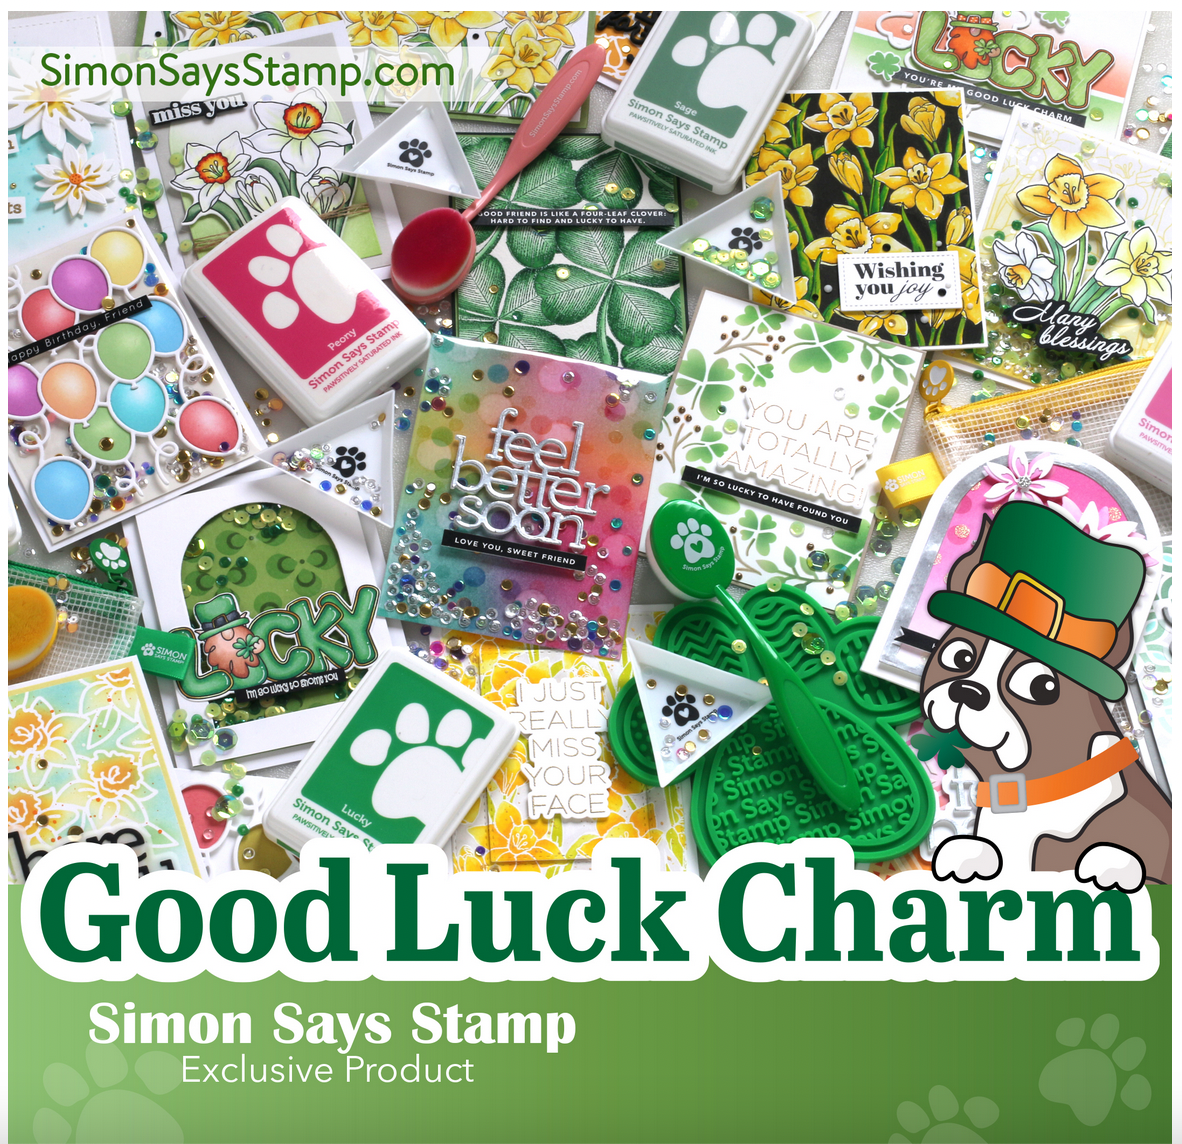 Simon Says Stamp, Good Luck Charm Release